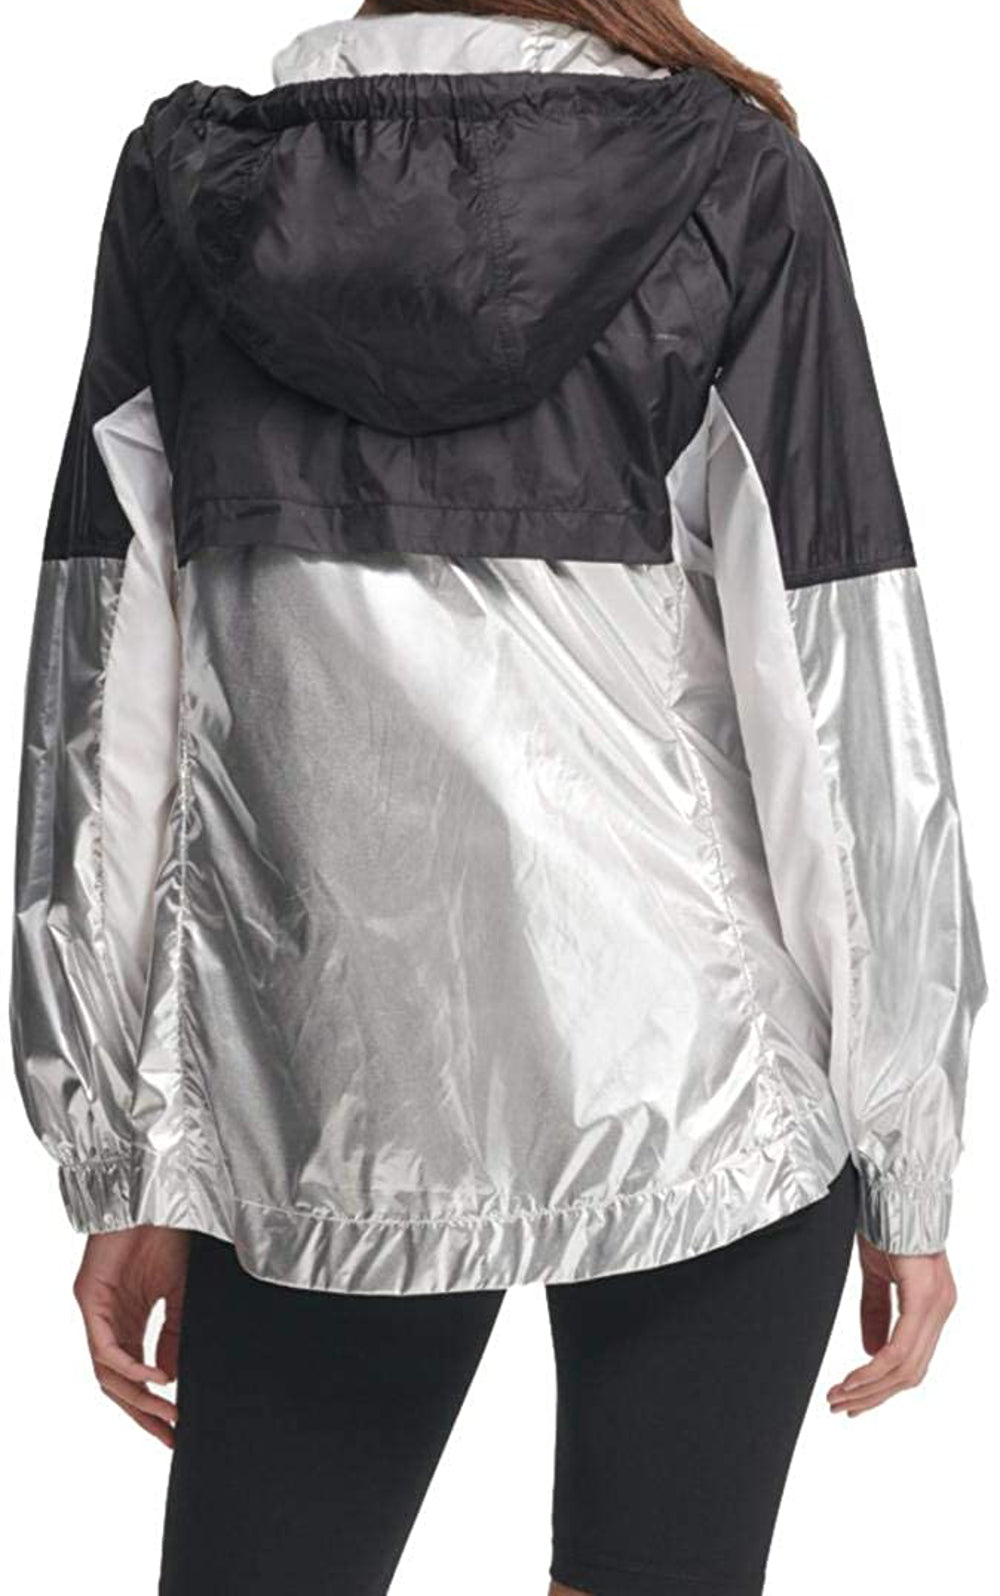 DKNY Womens Sport Colorblocked Hooded Jacket